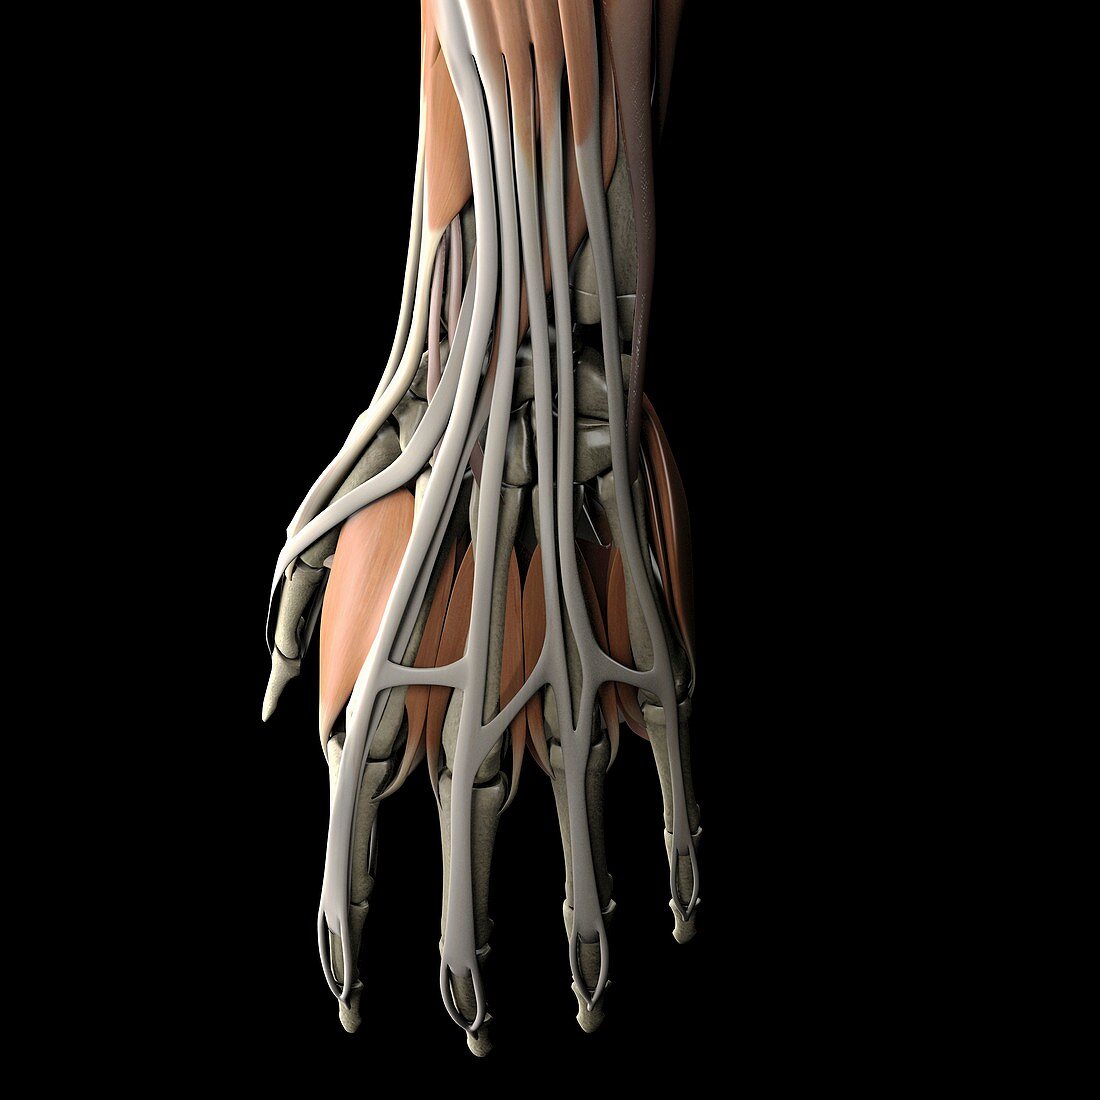 Anatomy of the Hand, artwork